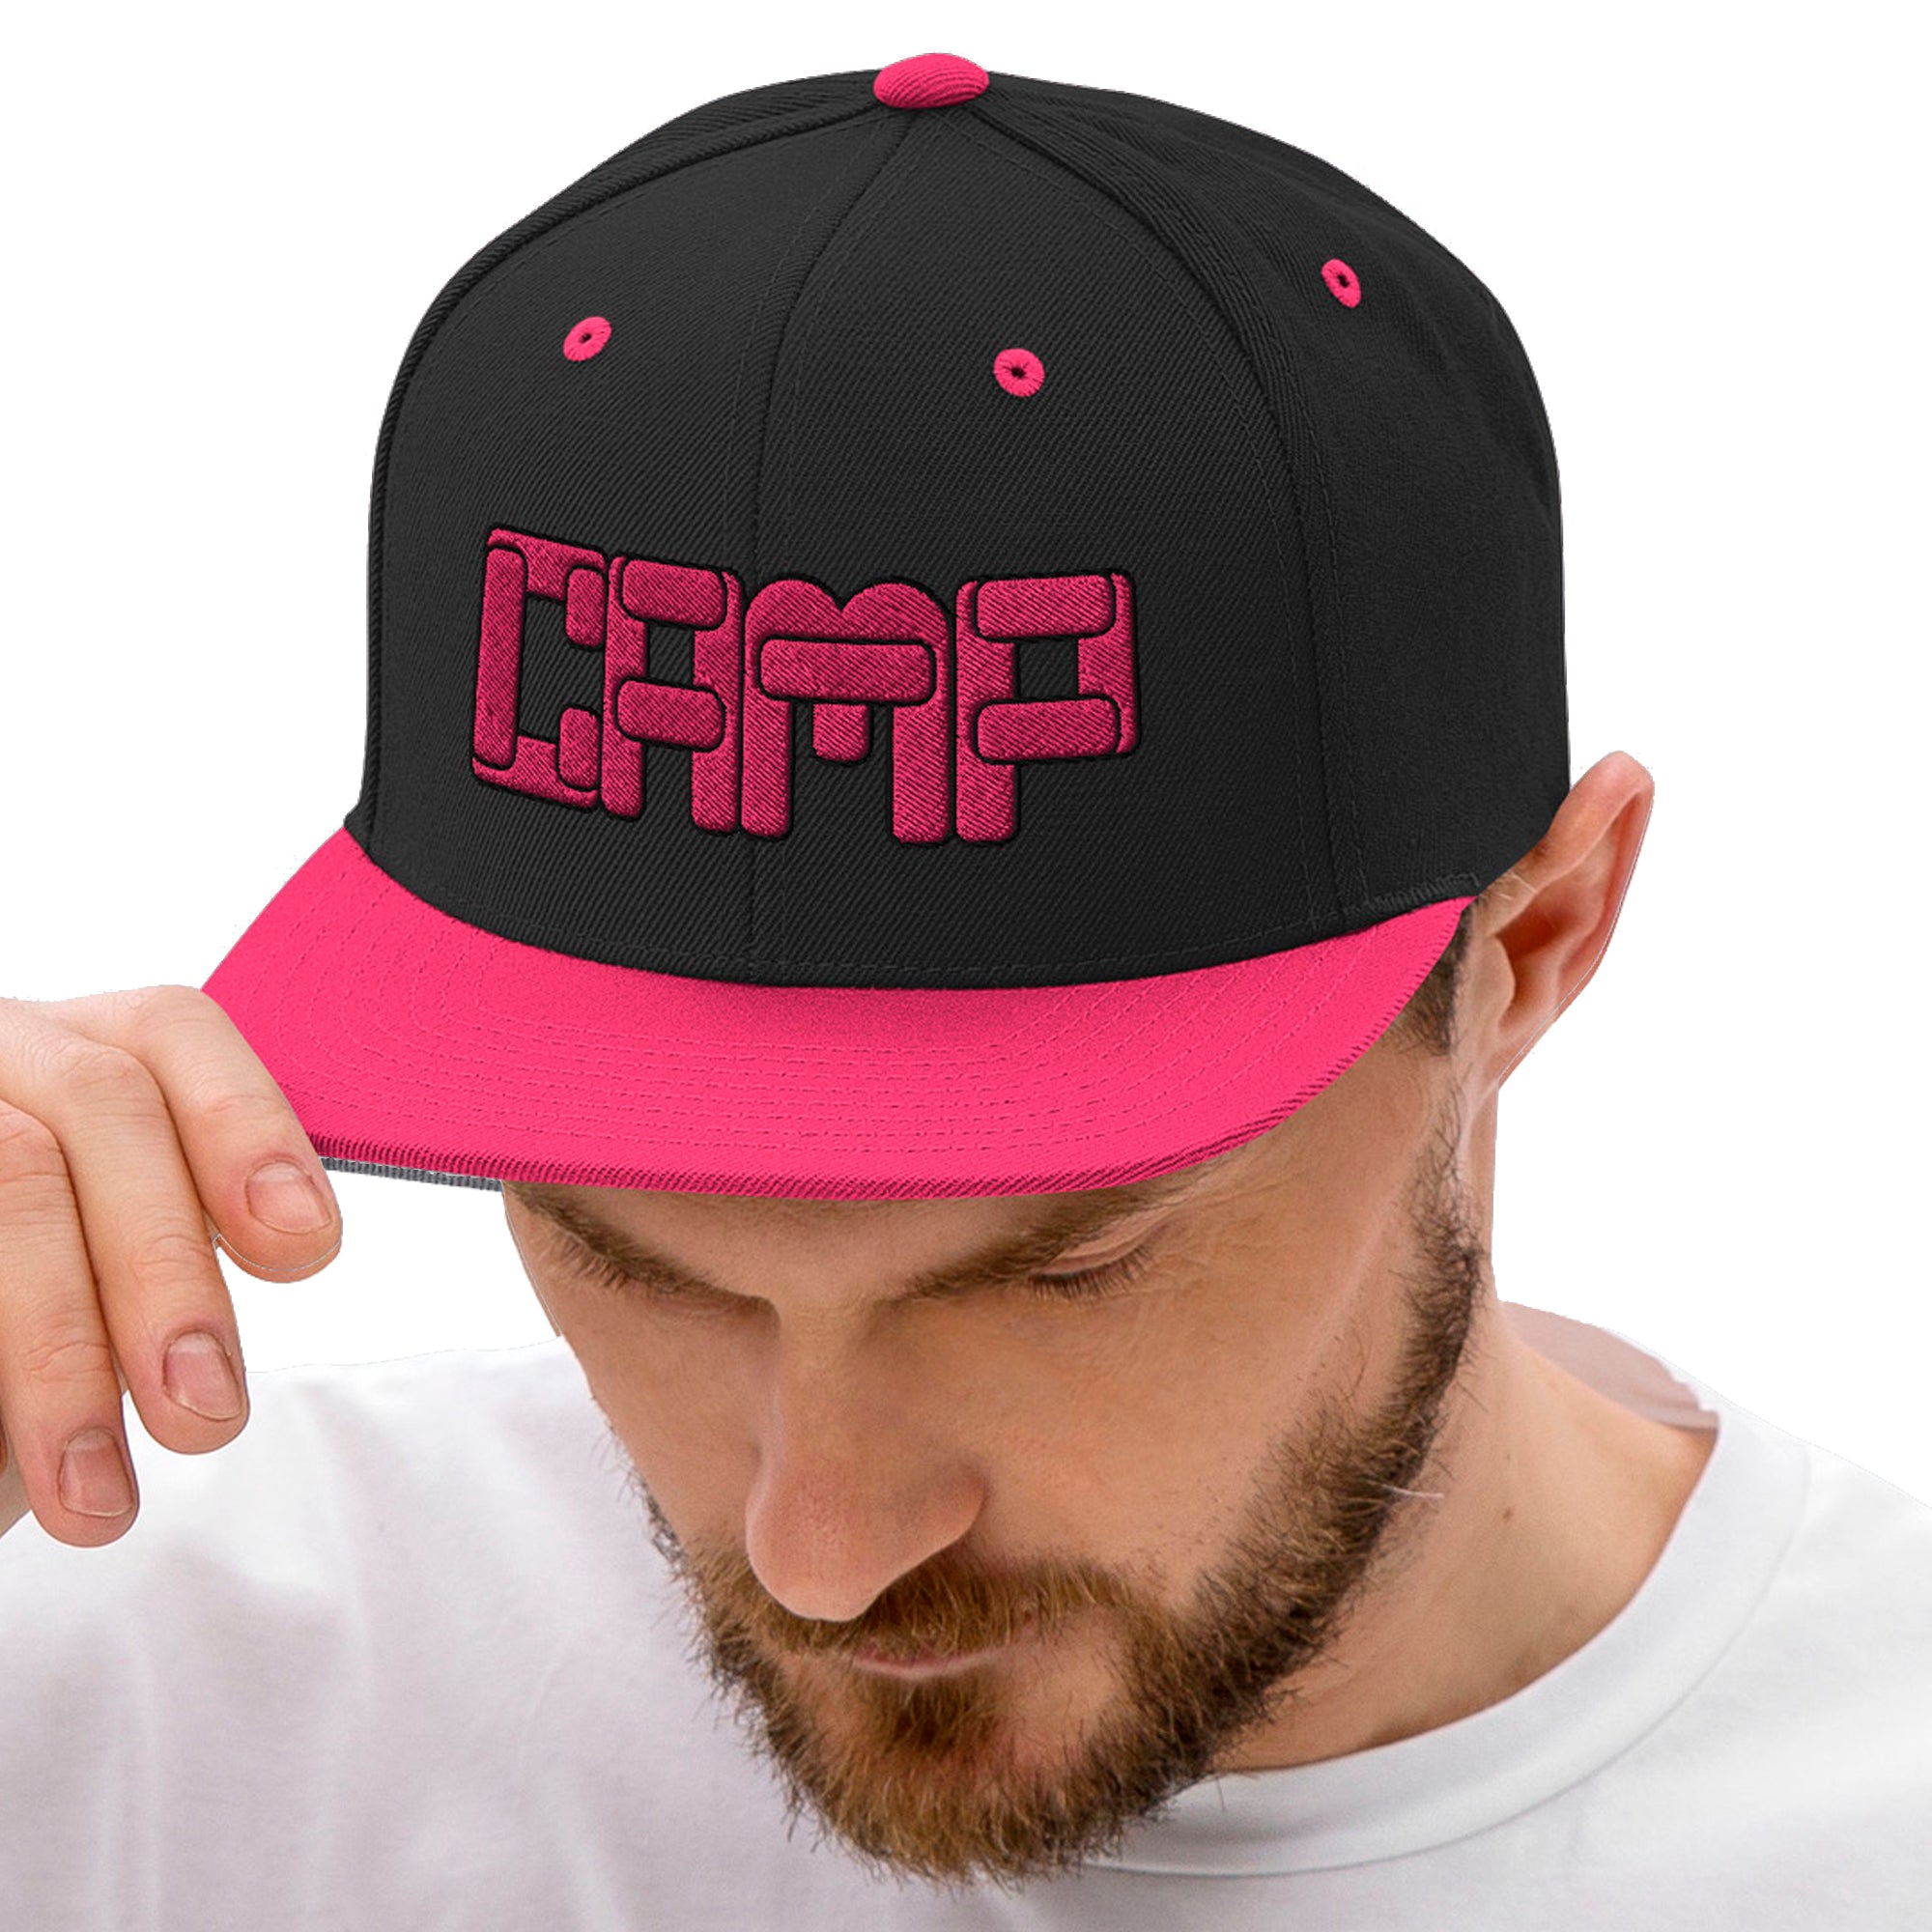 Snapback Cap [CAMP] Black/Pink